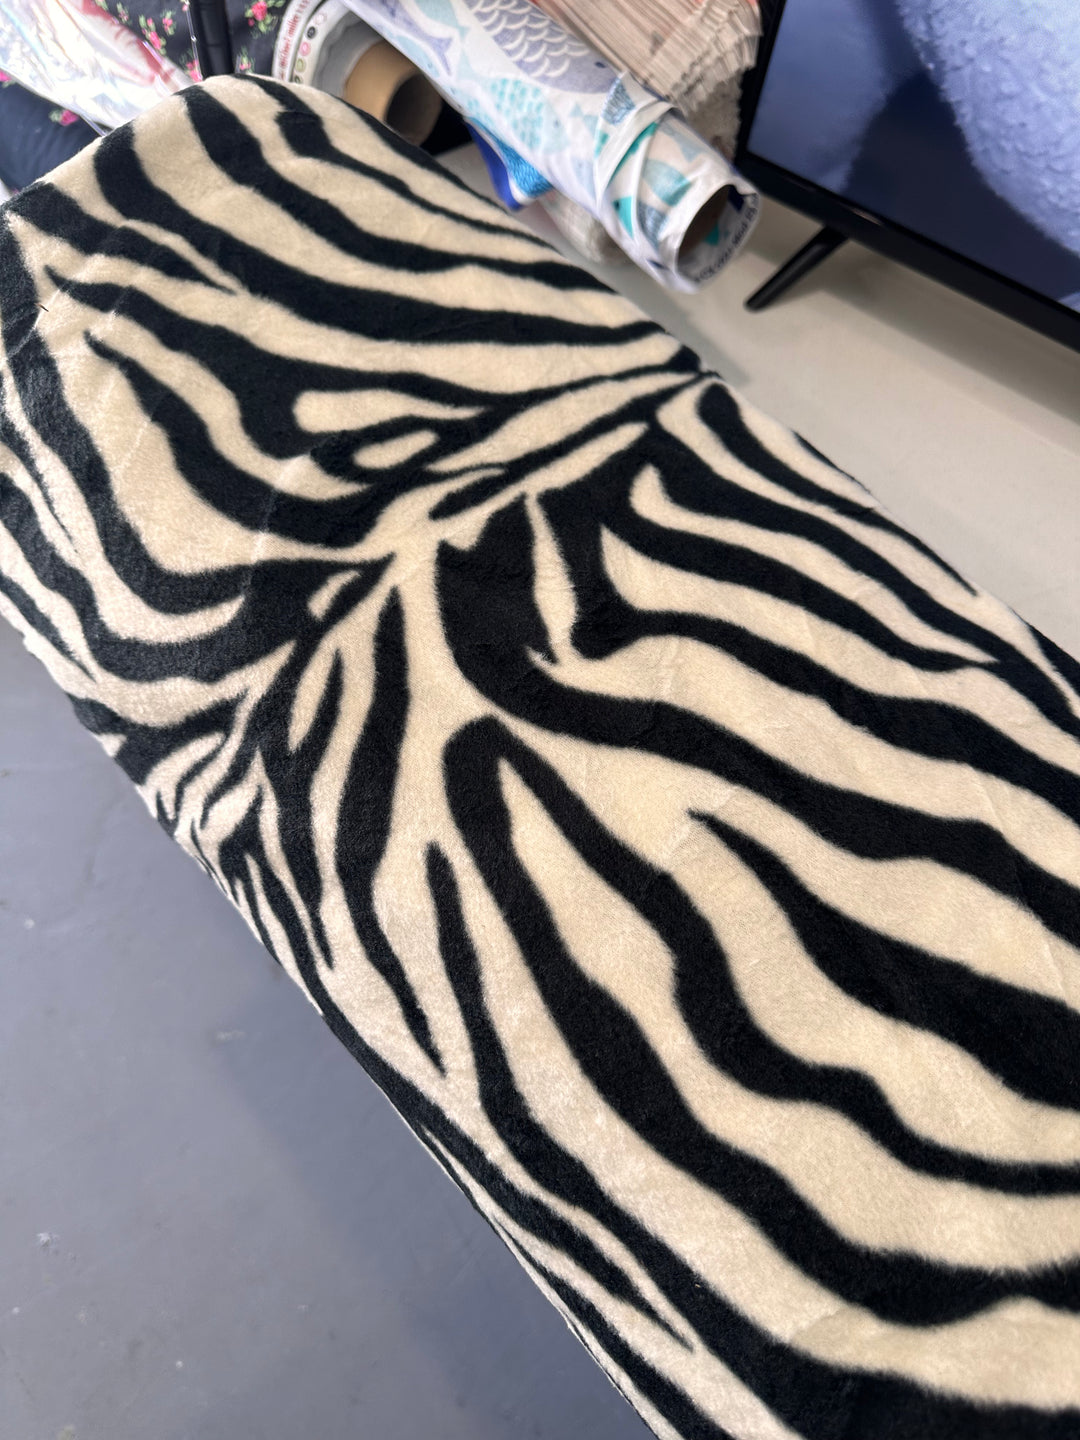 Zebra Print Fleece Fabric by the yard